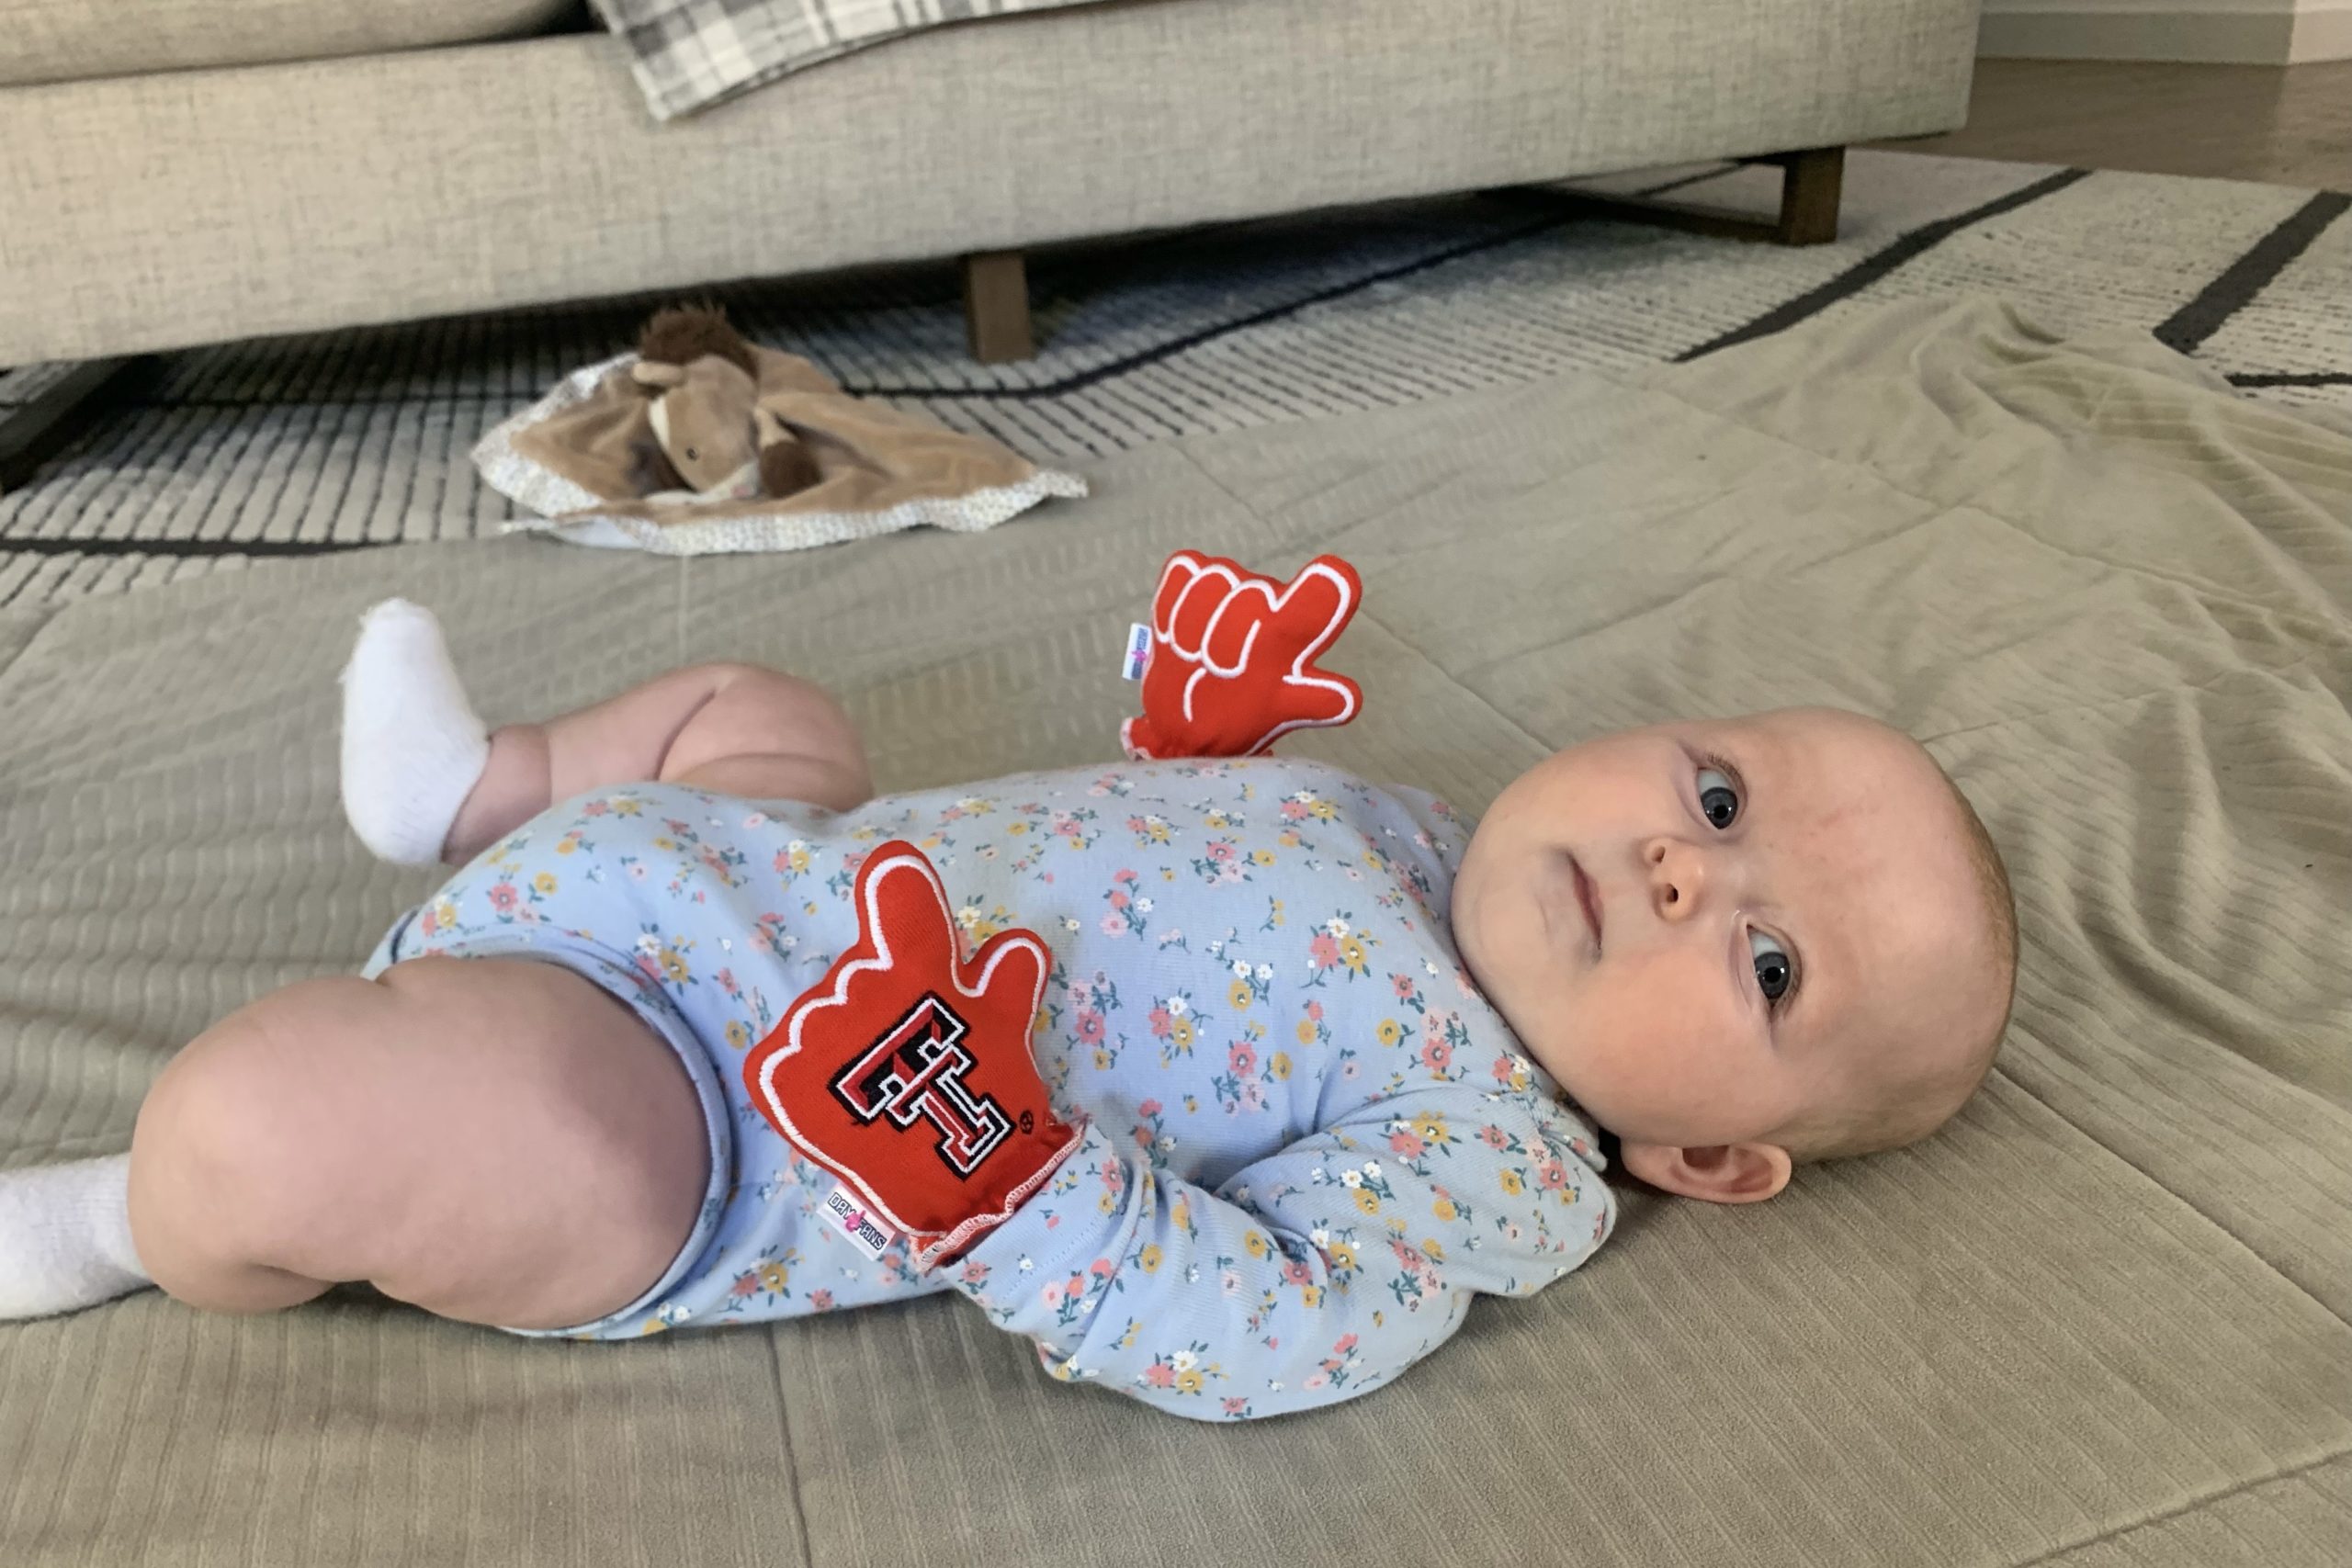 Baby wears Texas Tech mittens